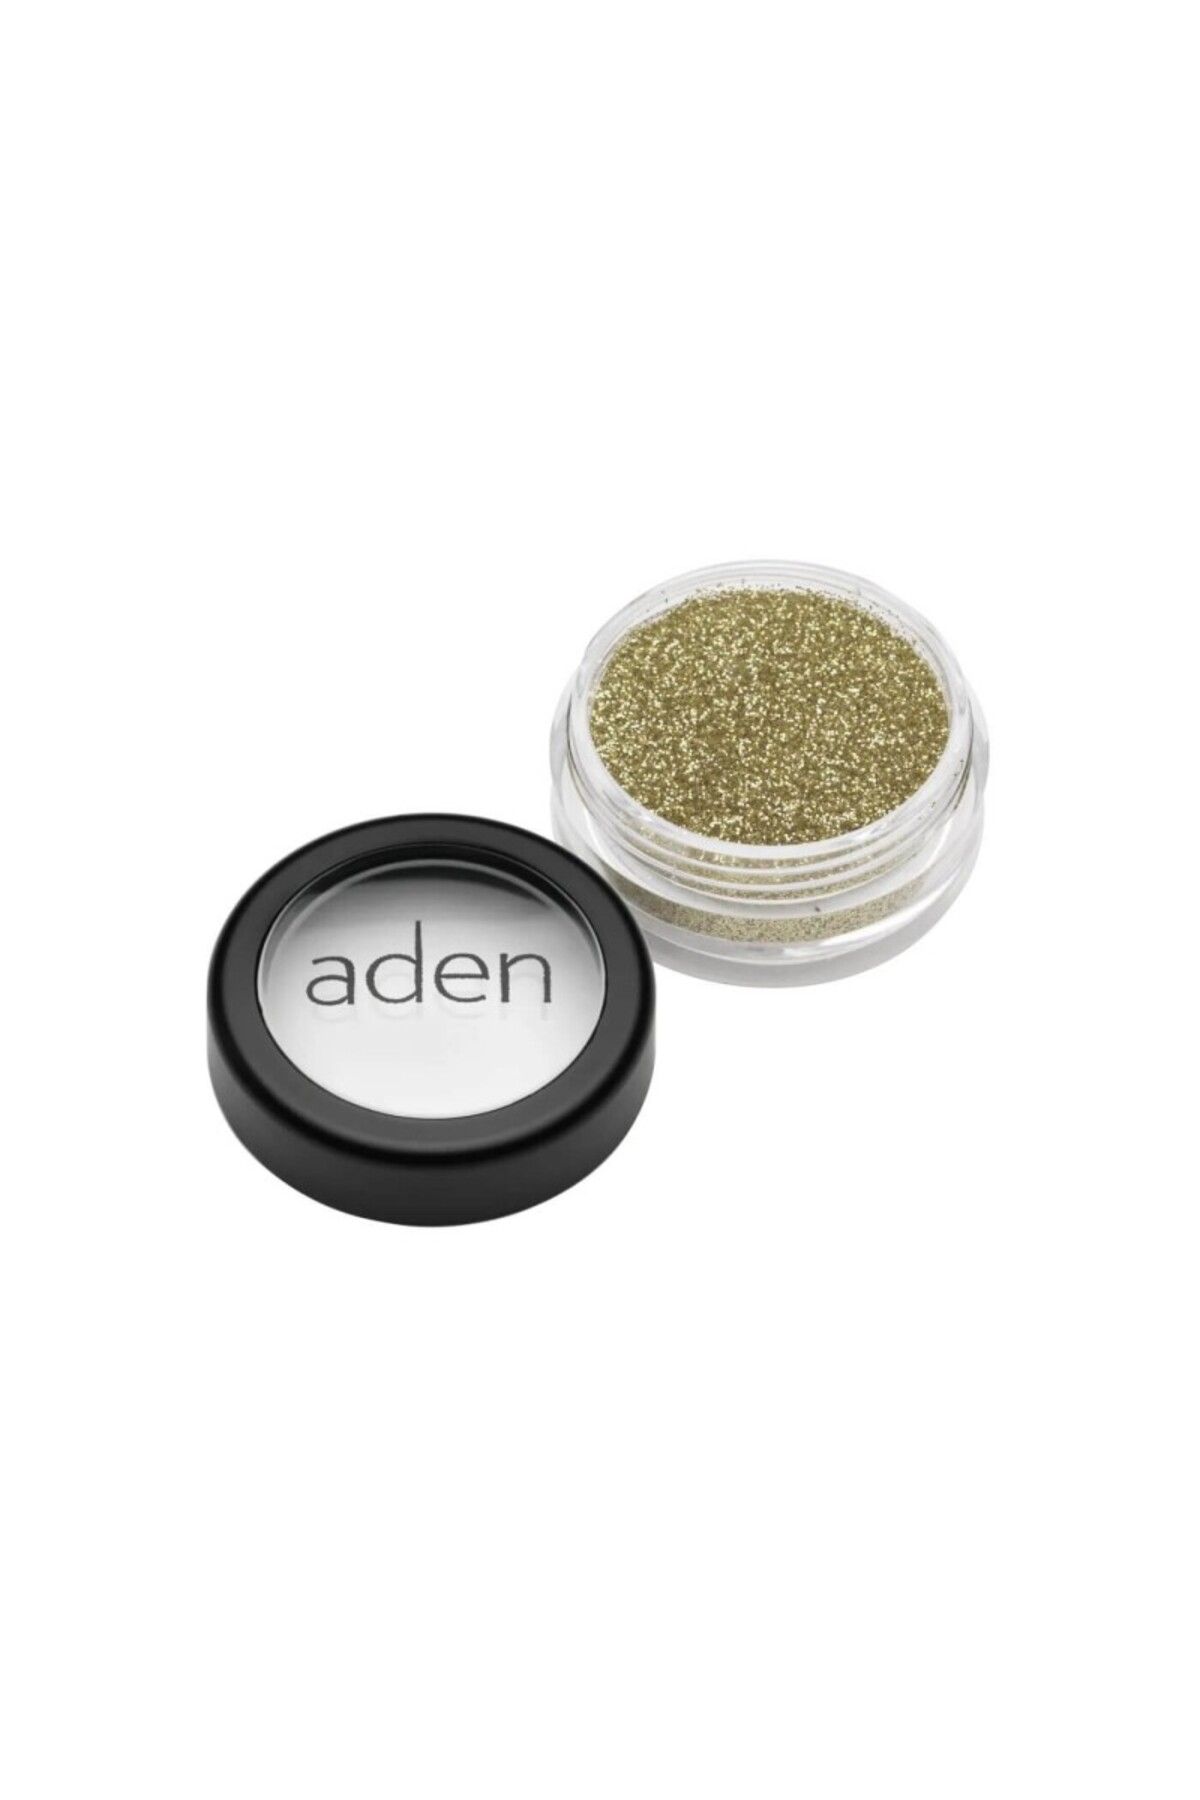 Aden Glitter Powder ( 26 Everness )